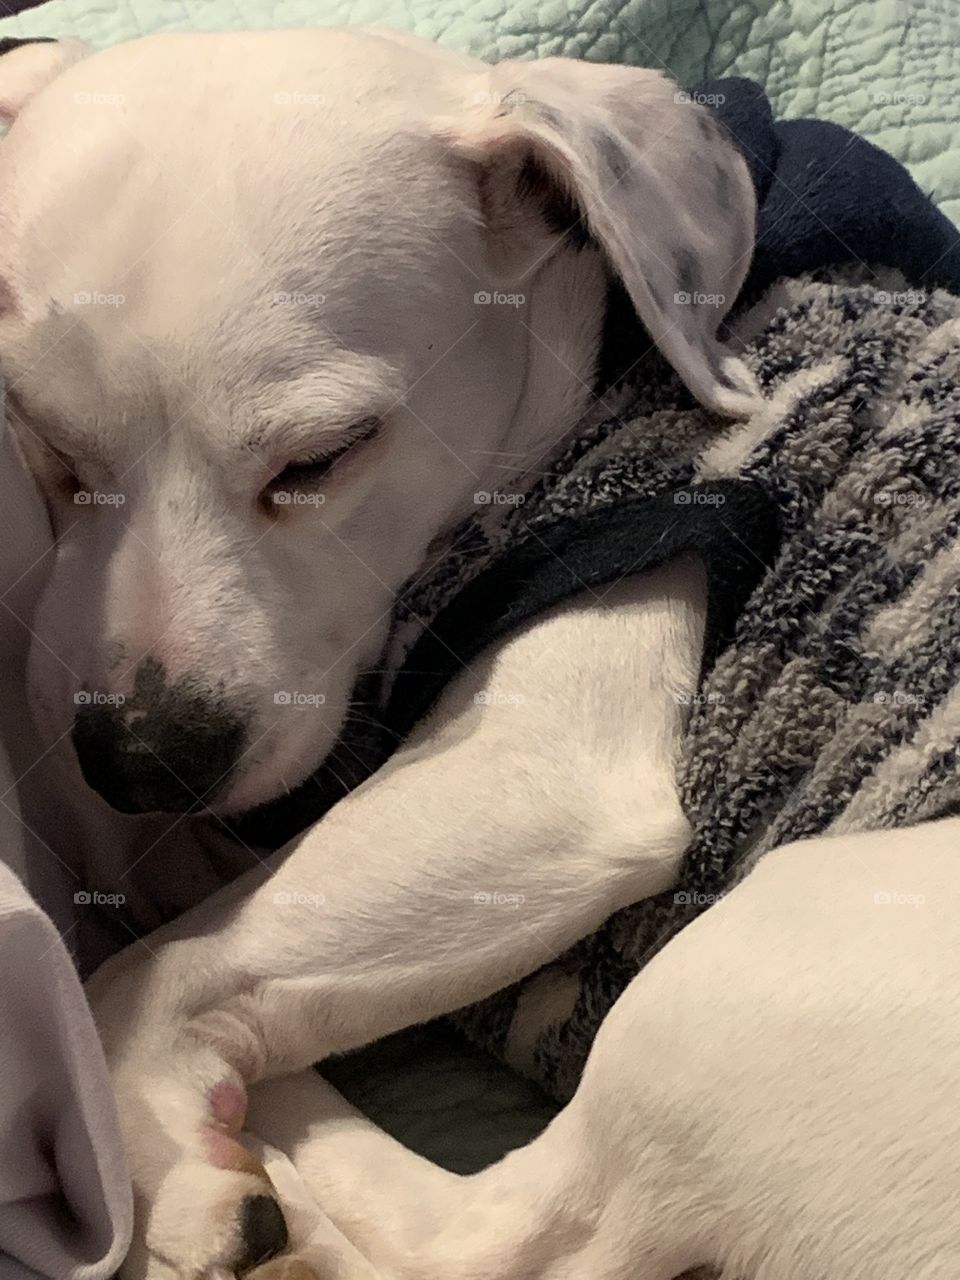 White dog with black spot named Casper wearing fuzzy shirt sleeping. Very cute. 